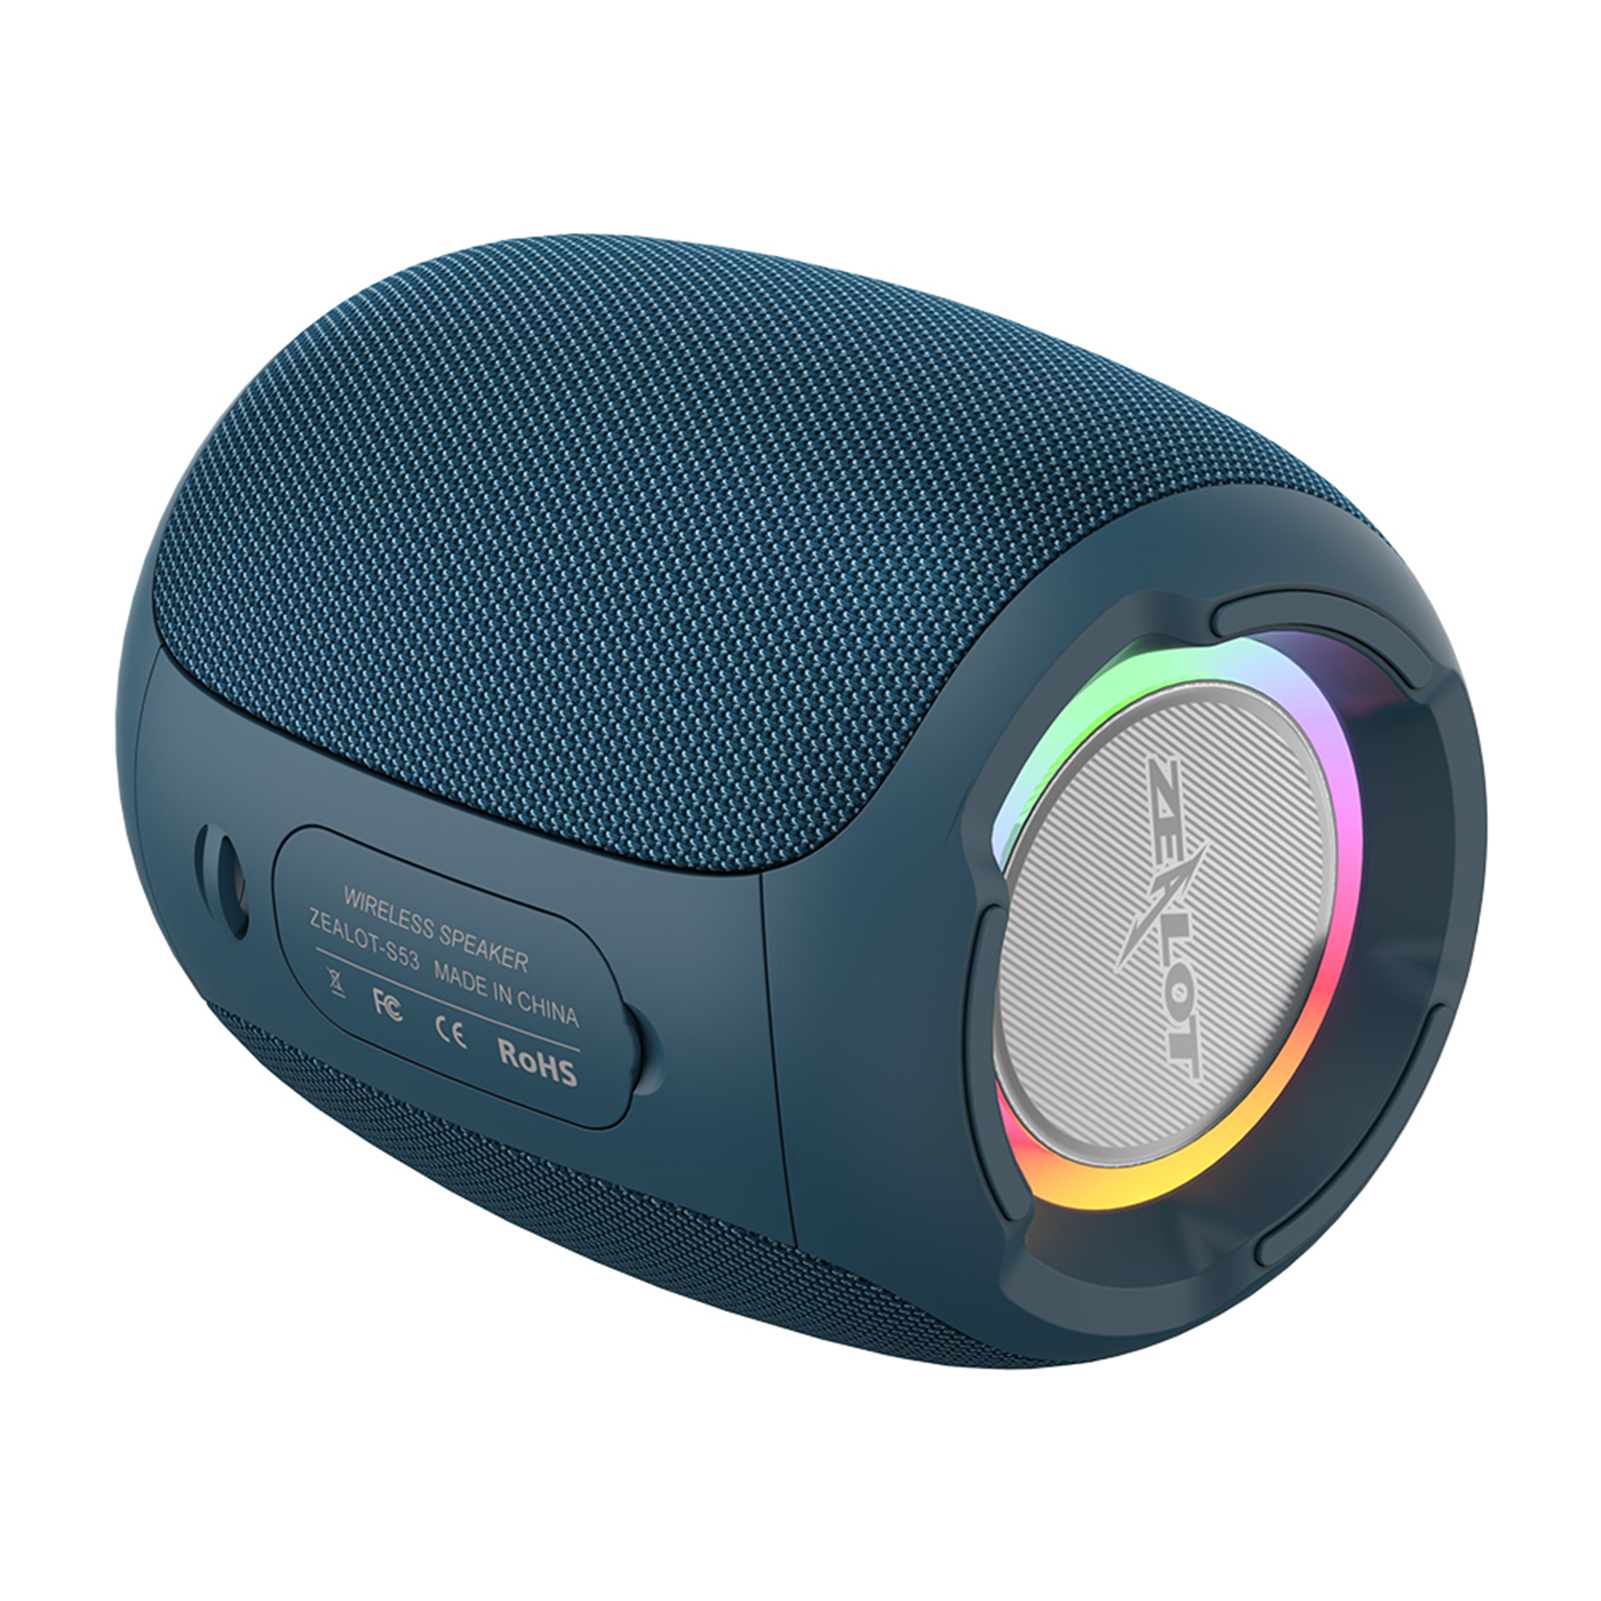 ZEALOT S53 Portable Wireless Speaker with BT 5.0 Technology IPX6